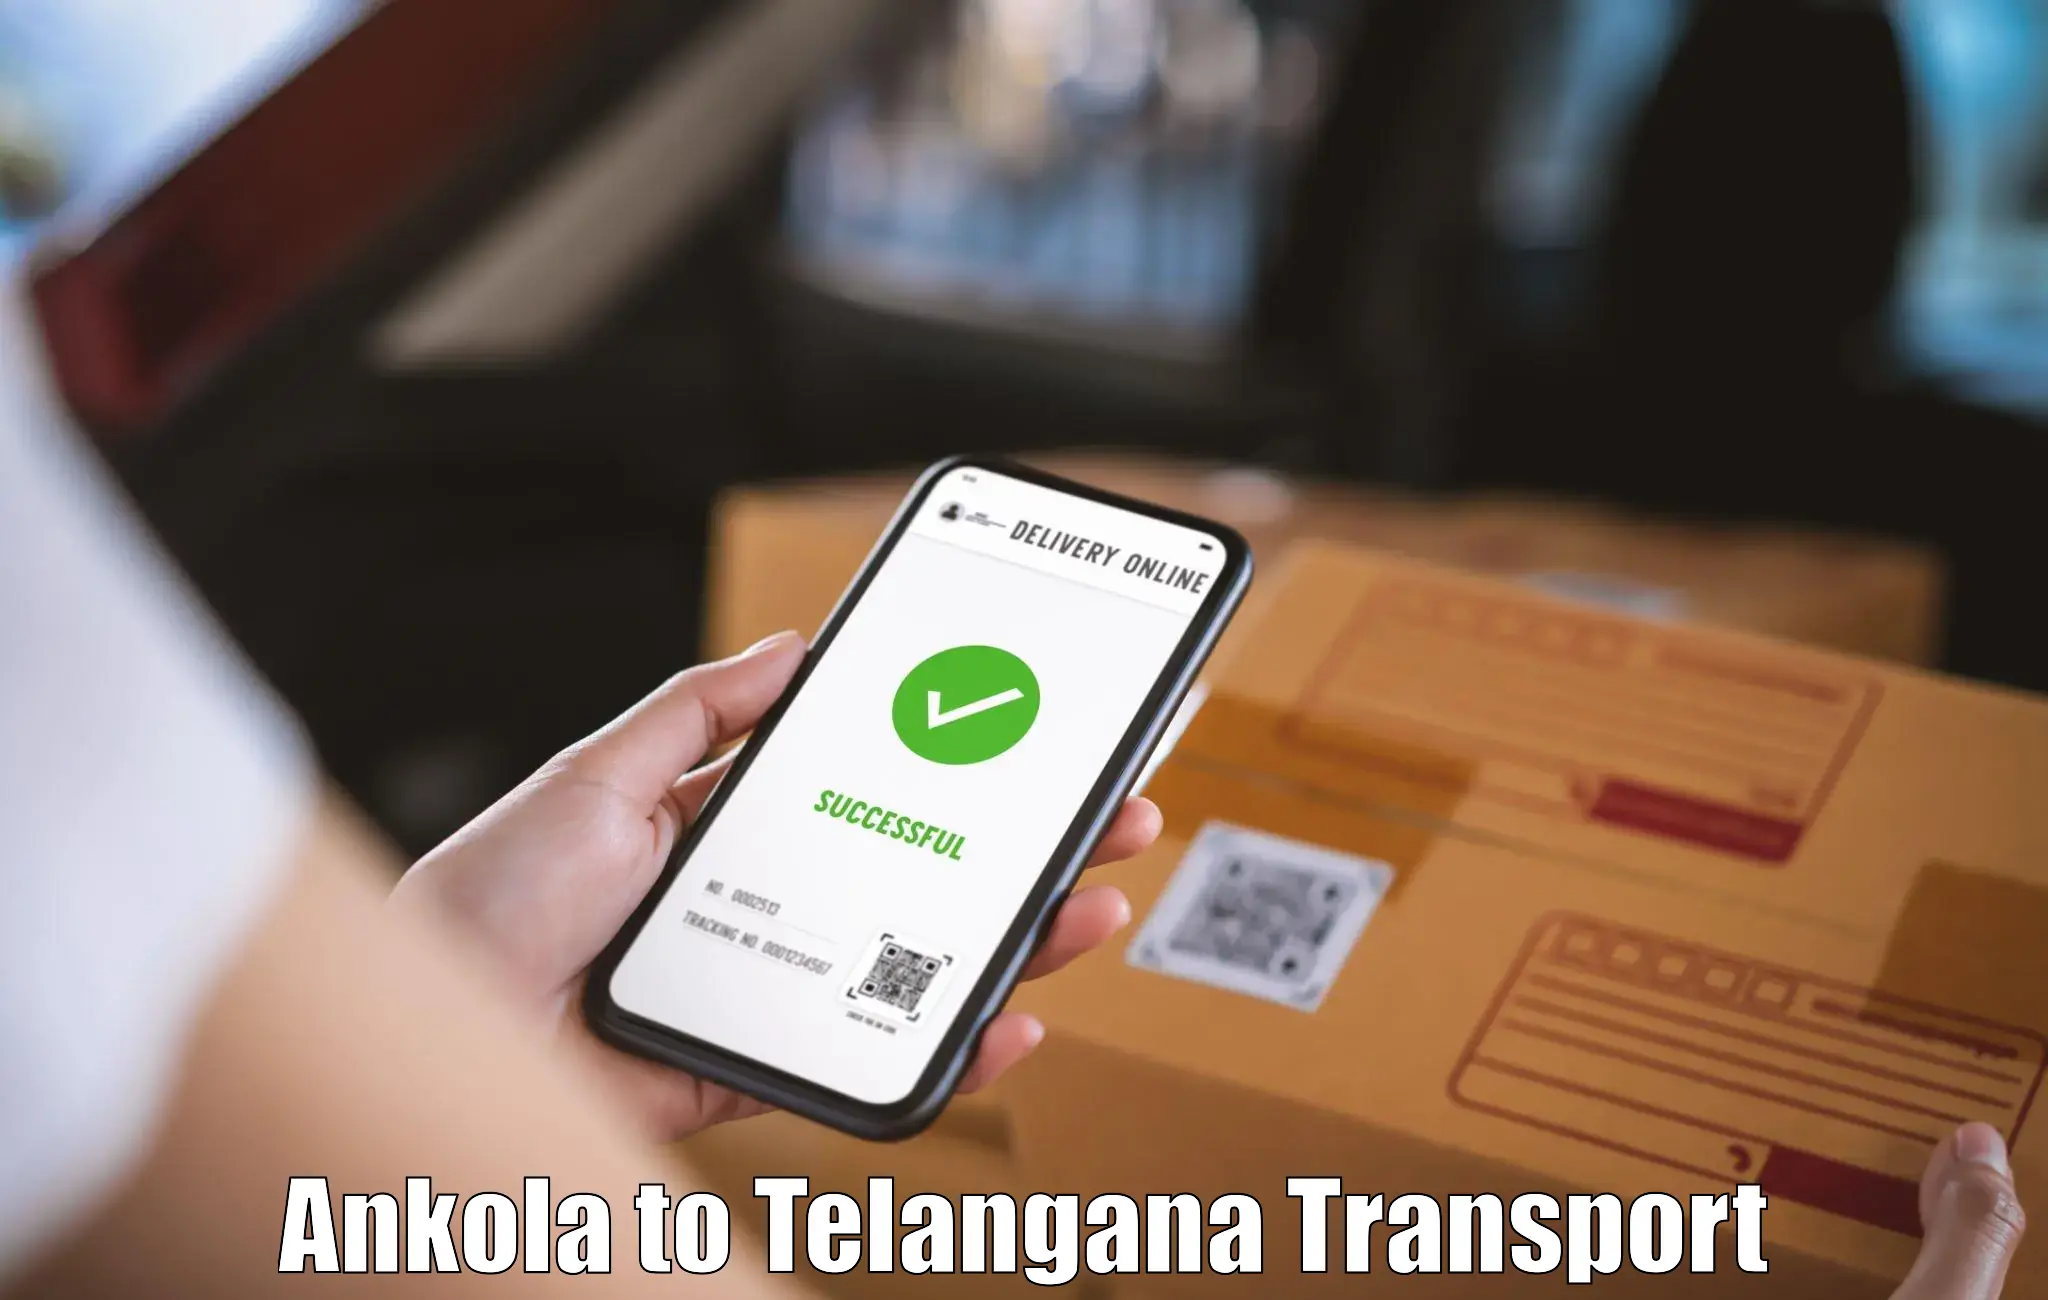 Transport in sharing Ankola to Telangana